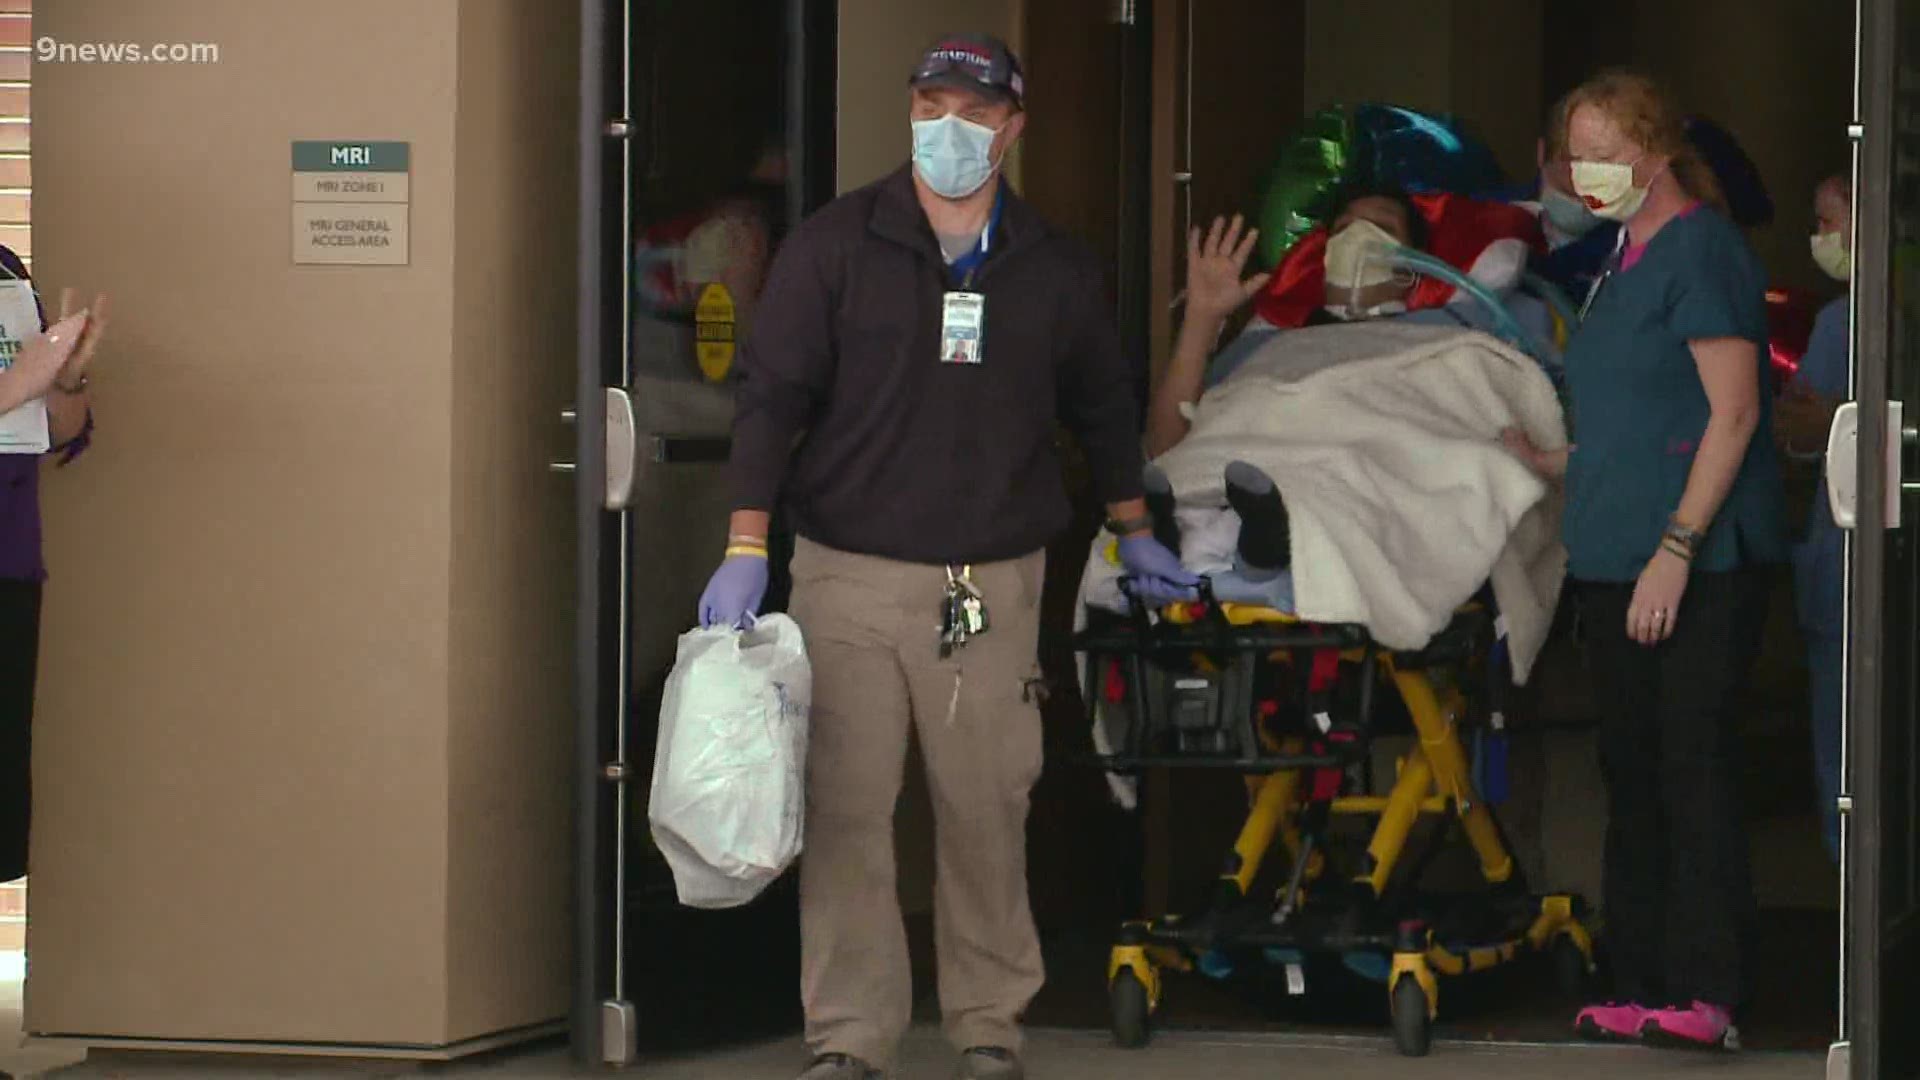 Jose Diaz, 42, spent his 42nd birthday on a ventilator.